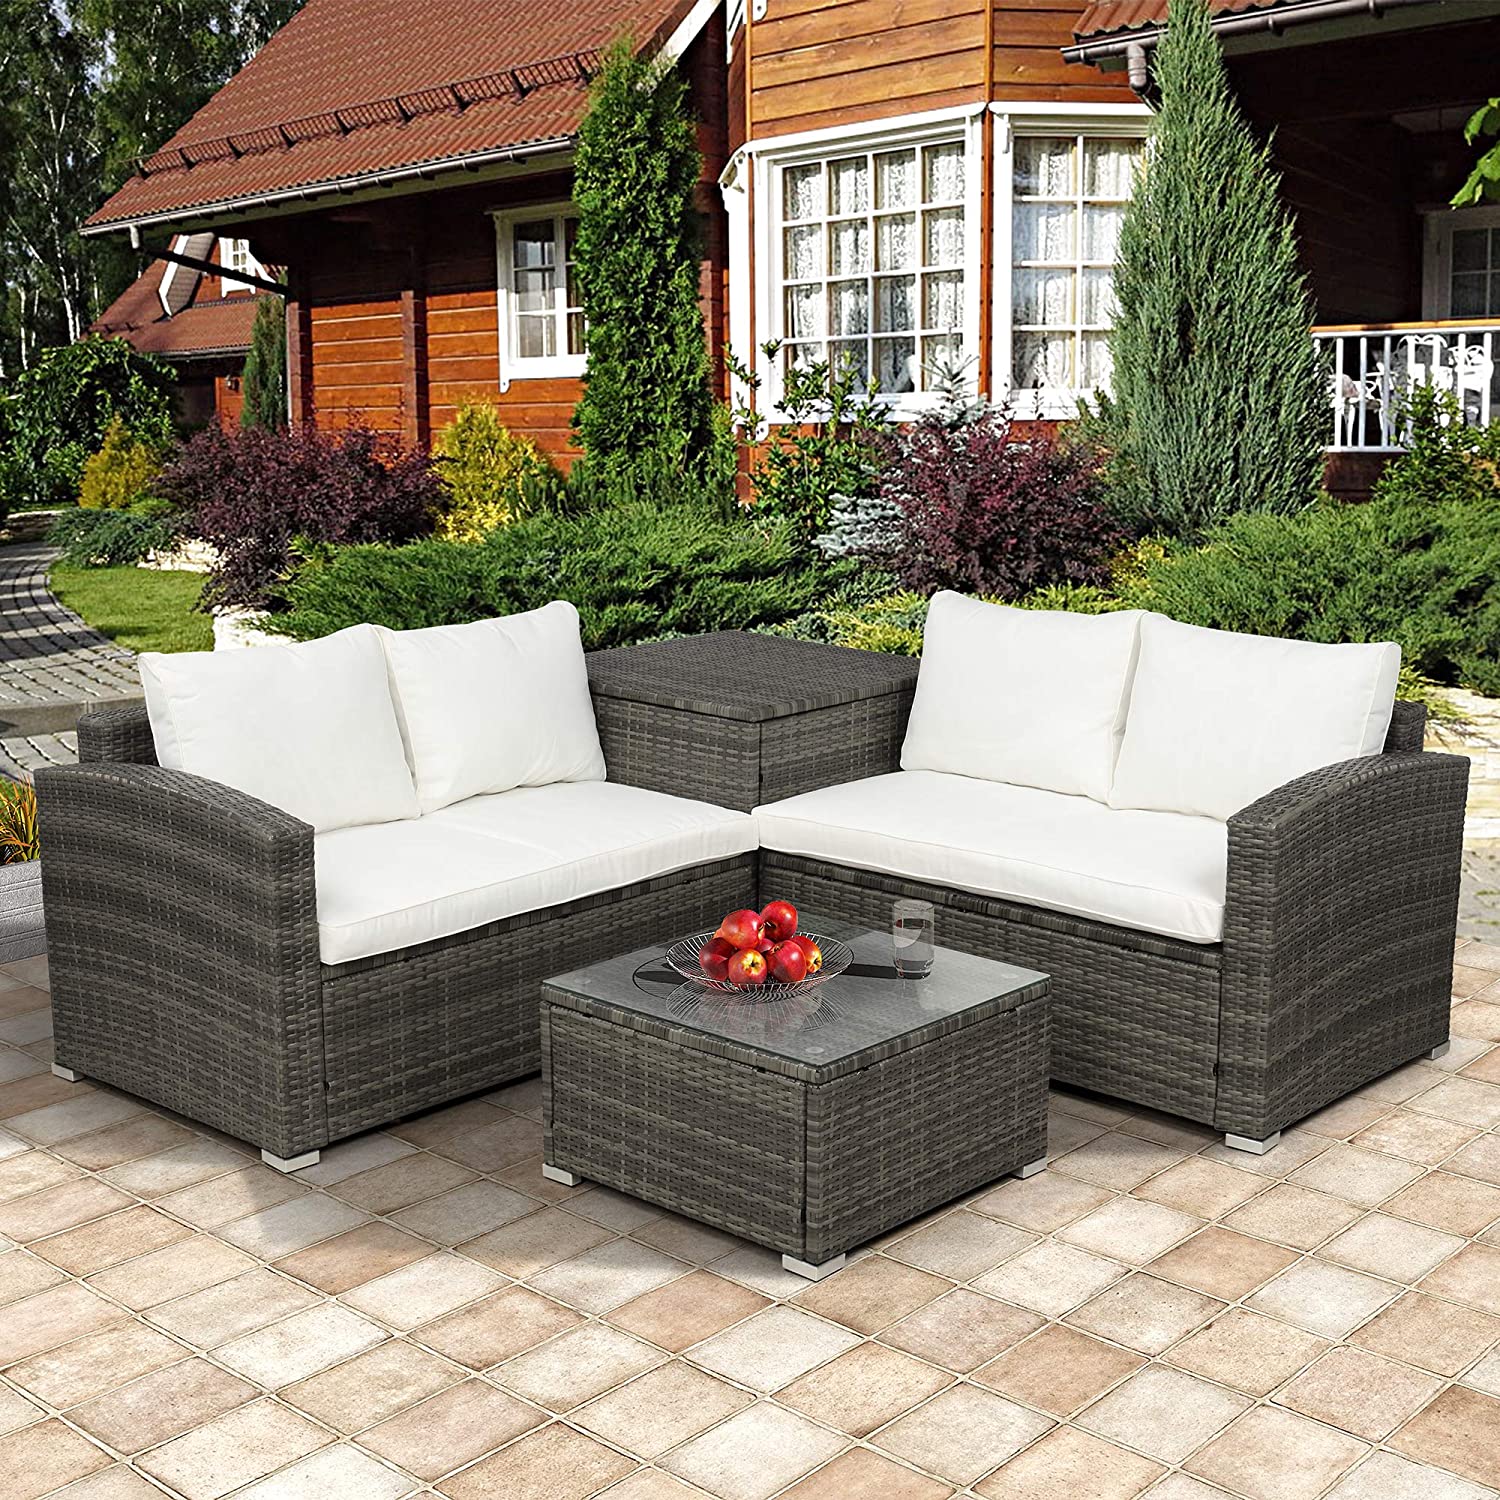 VIRUBI 4 PCS Outdoor Cushioned PE Rattan Wicker Sectional Sofa Set Garden Patio Furniture Set (Beige Cushion) - image 1 of 6